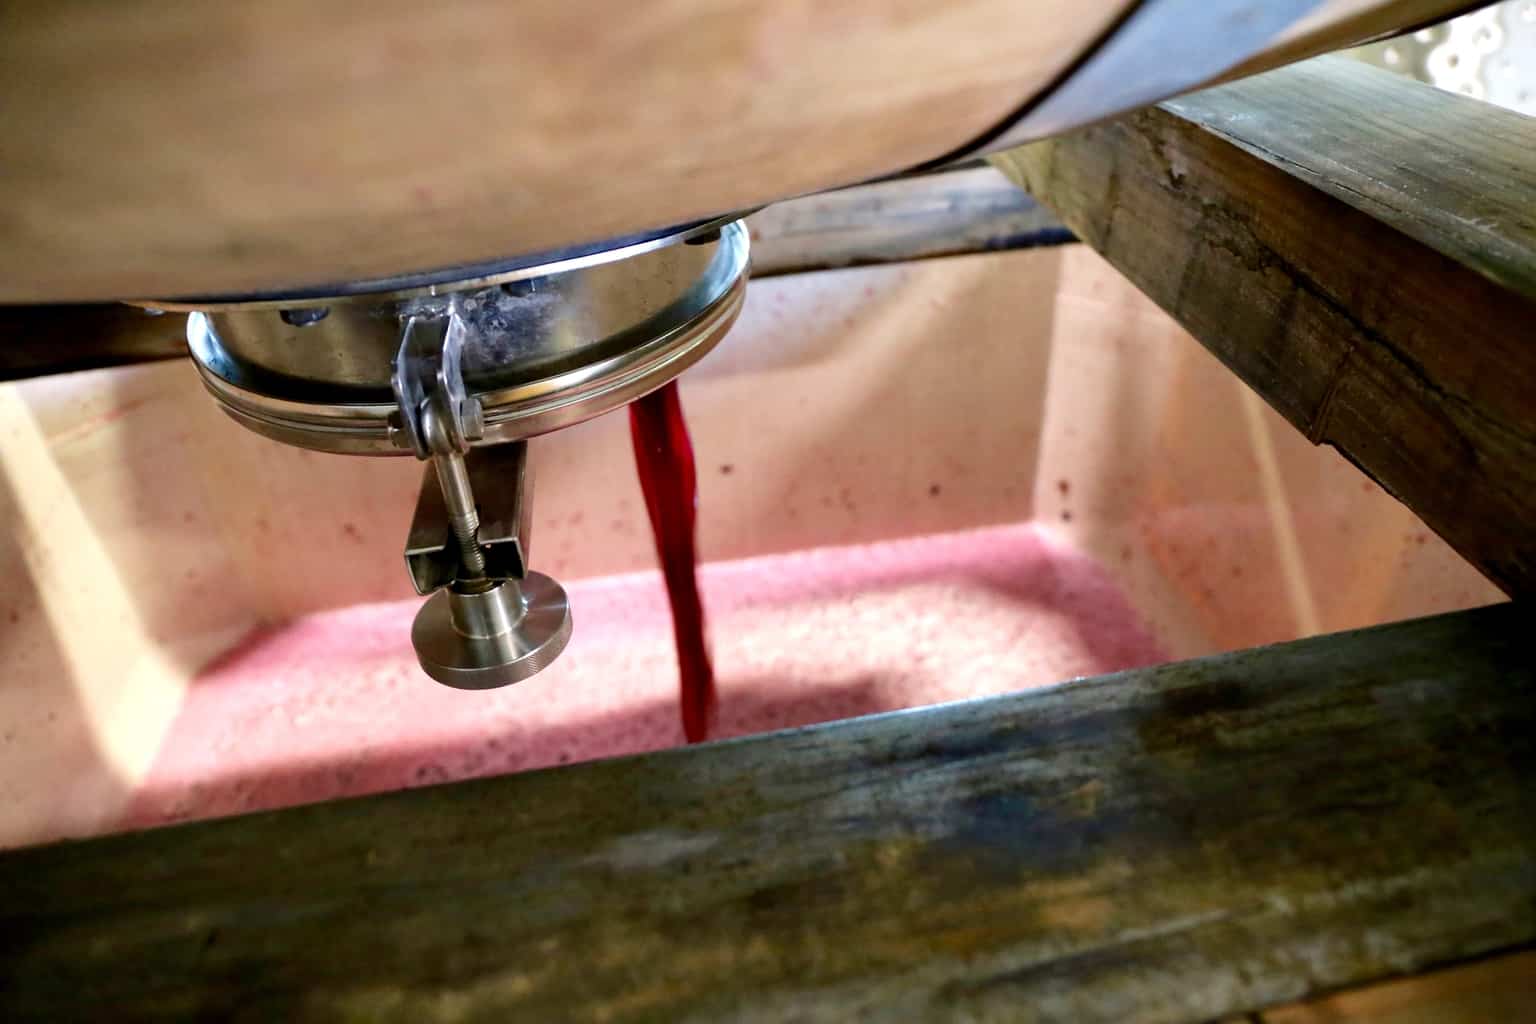 Rotator barrel draining at the end of fermentation.